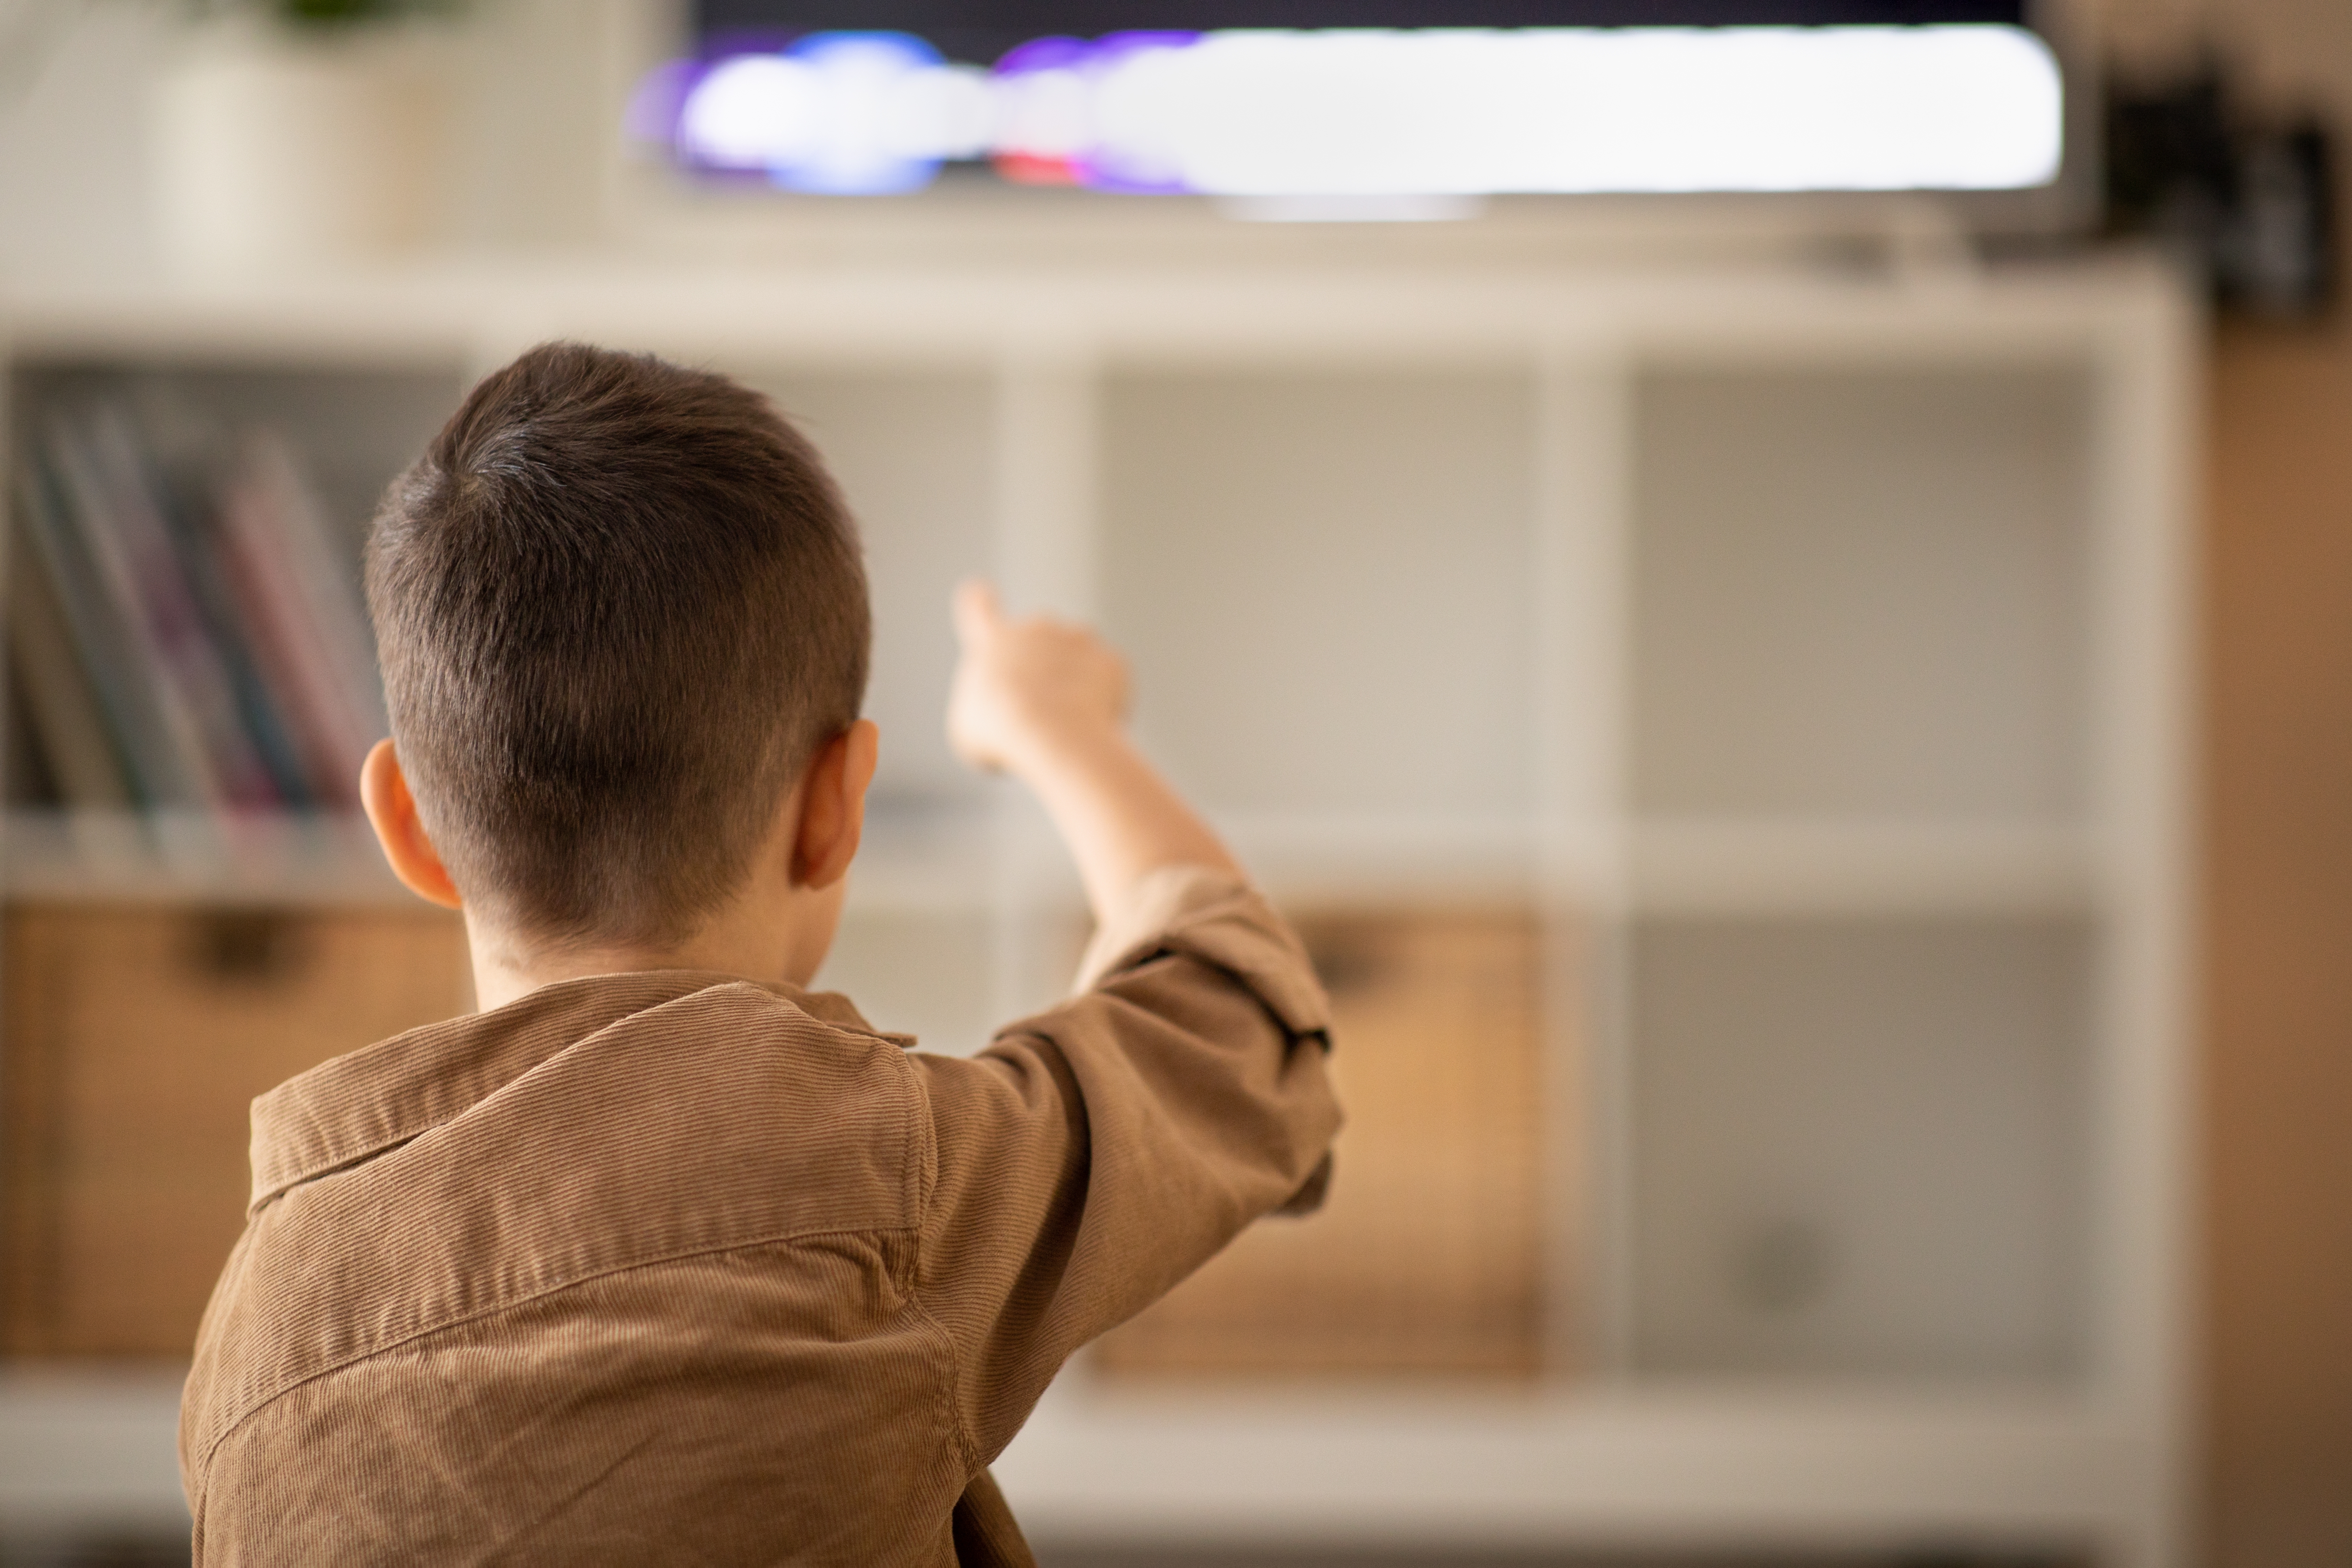 A child watching TV | Source: Shutterstock